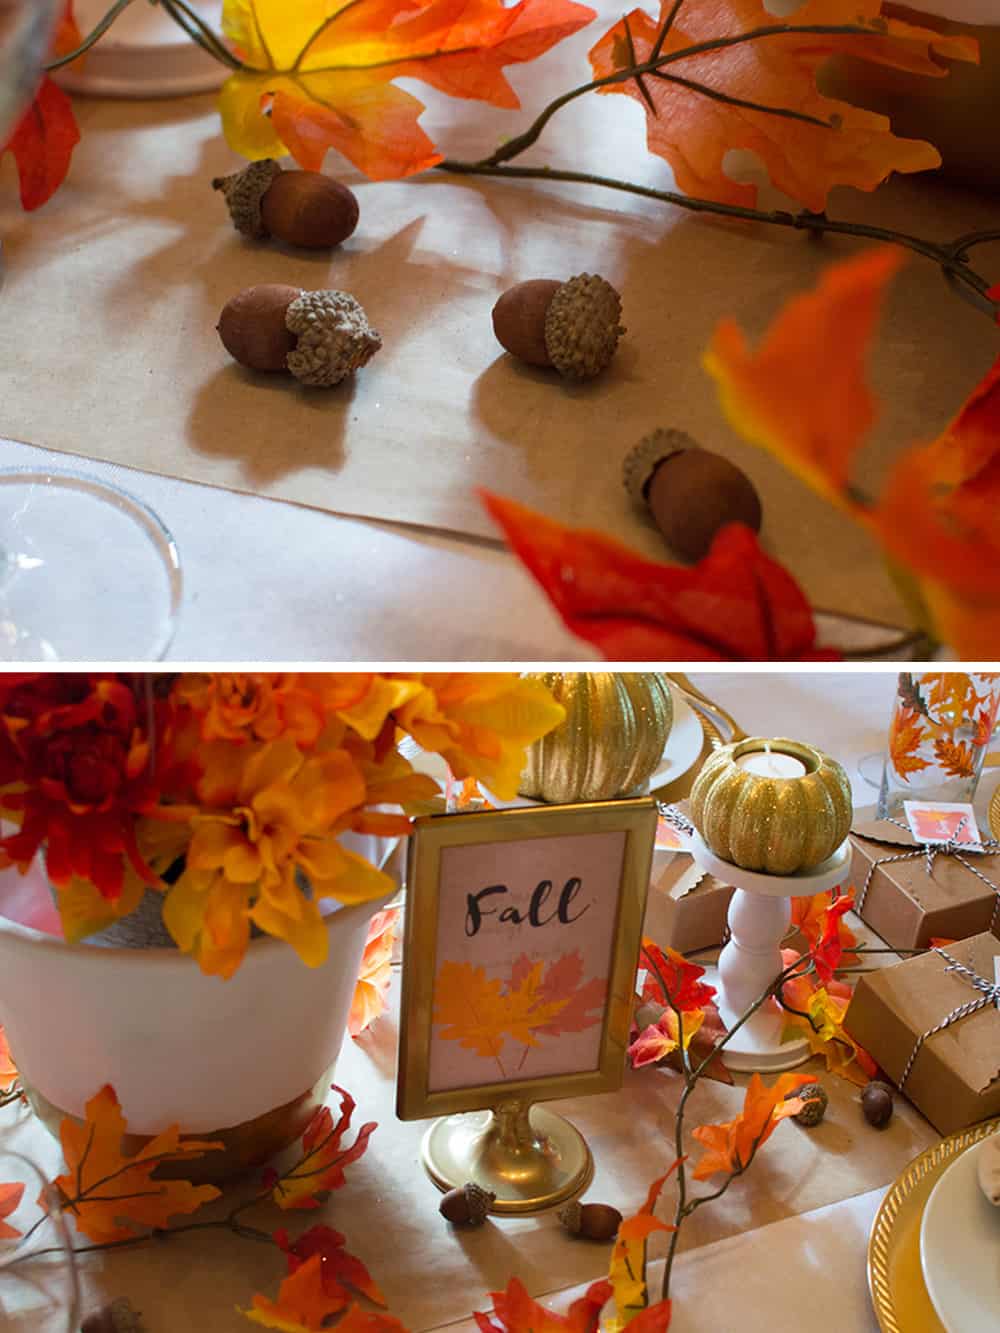 Acorn details on this Festive Fall Tablescape from Elva M Design Studio